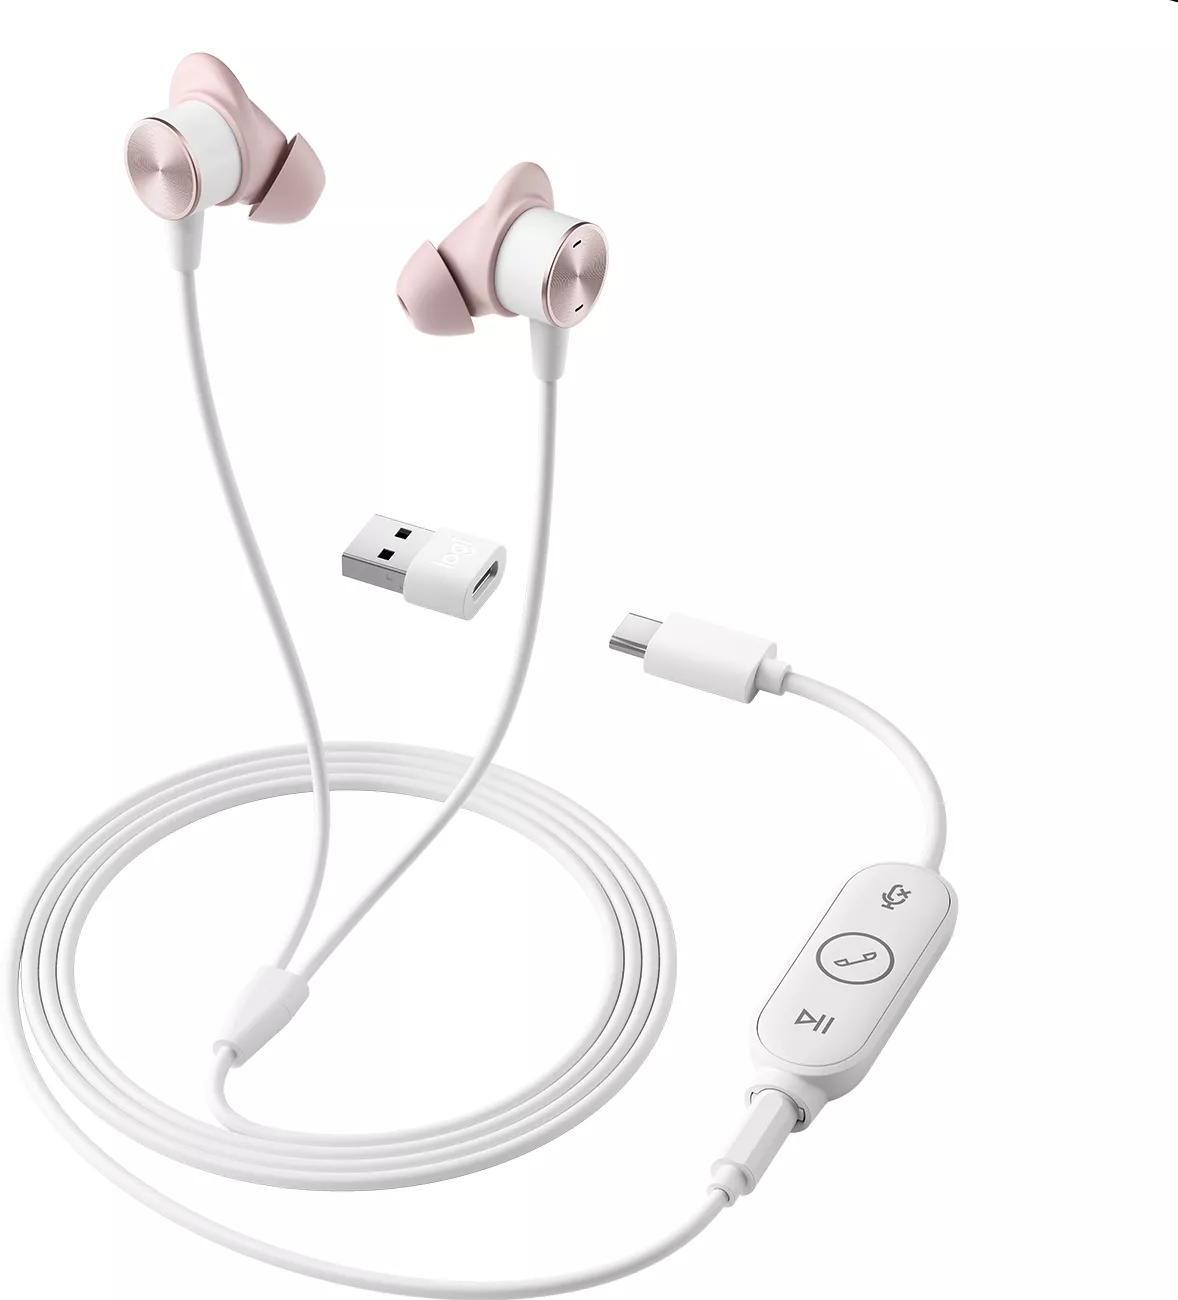 Achat LOGITECH Zone Wired Earbuds Headset in-ear wired 3.5 mm et autres produits de la marque Logitech